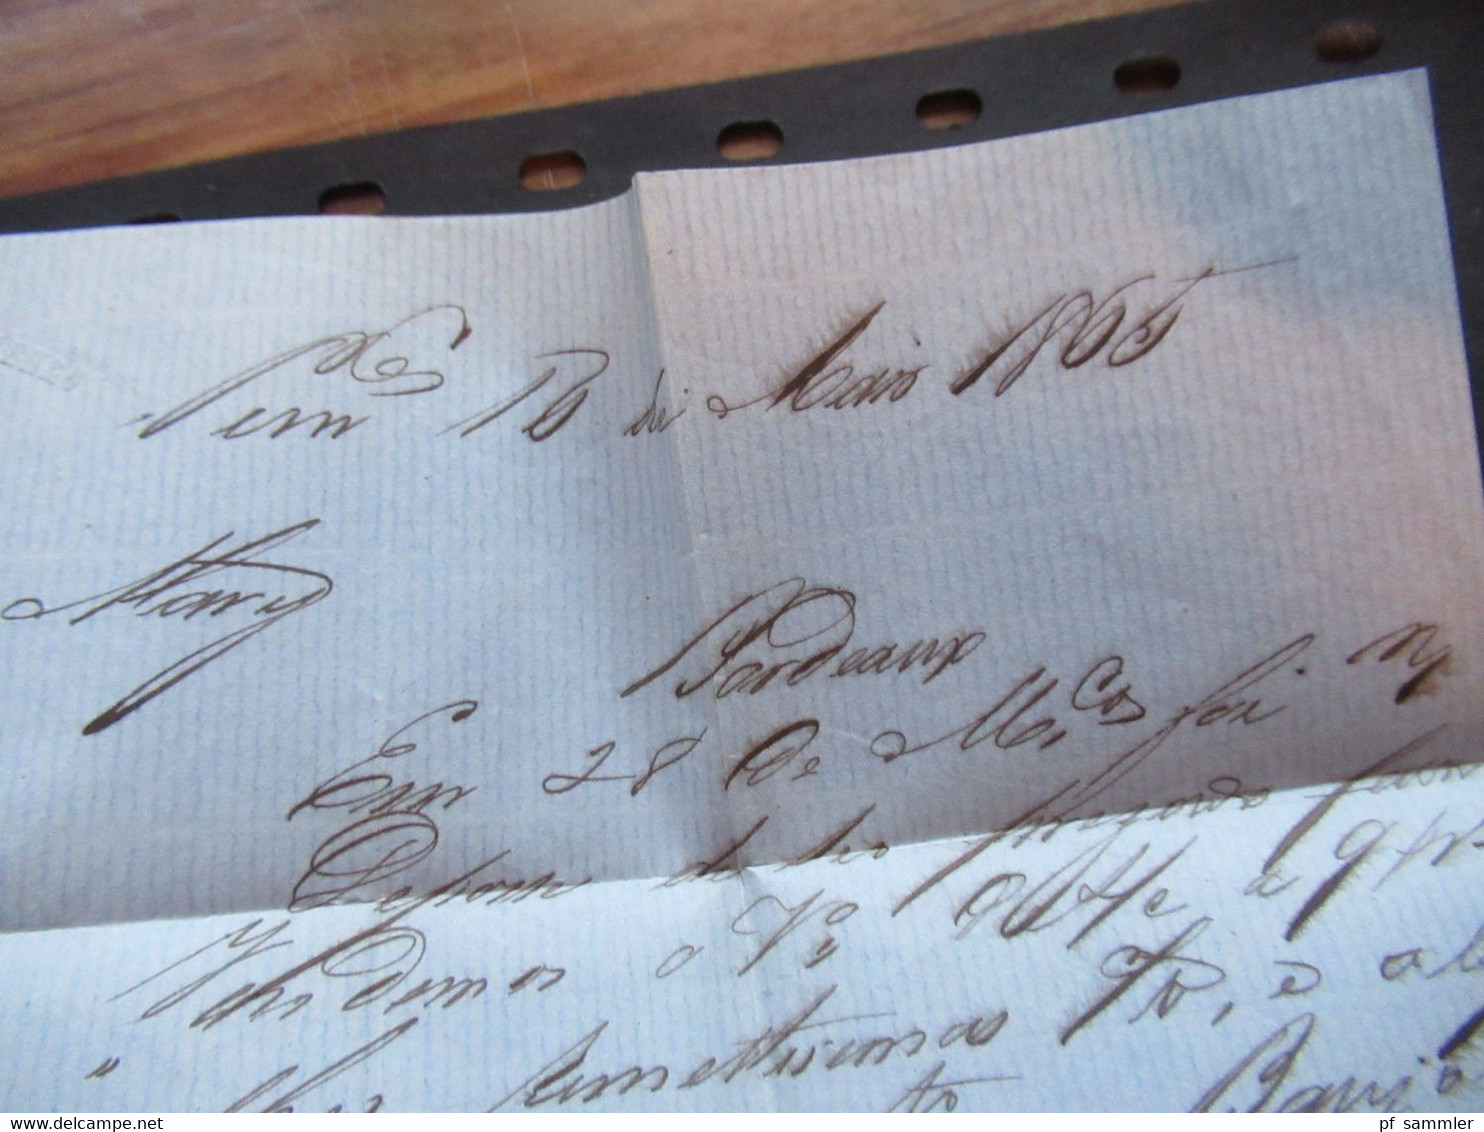 Brasilien Pernambuco 1865 Schiffspost über London nach Bordeaux handschriftl. Parana Stp. GB 1F 60C rückseitig 6 Stempel